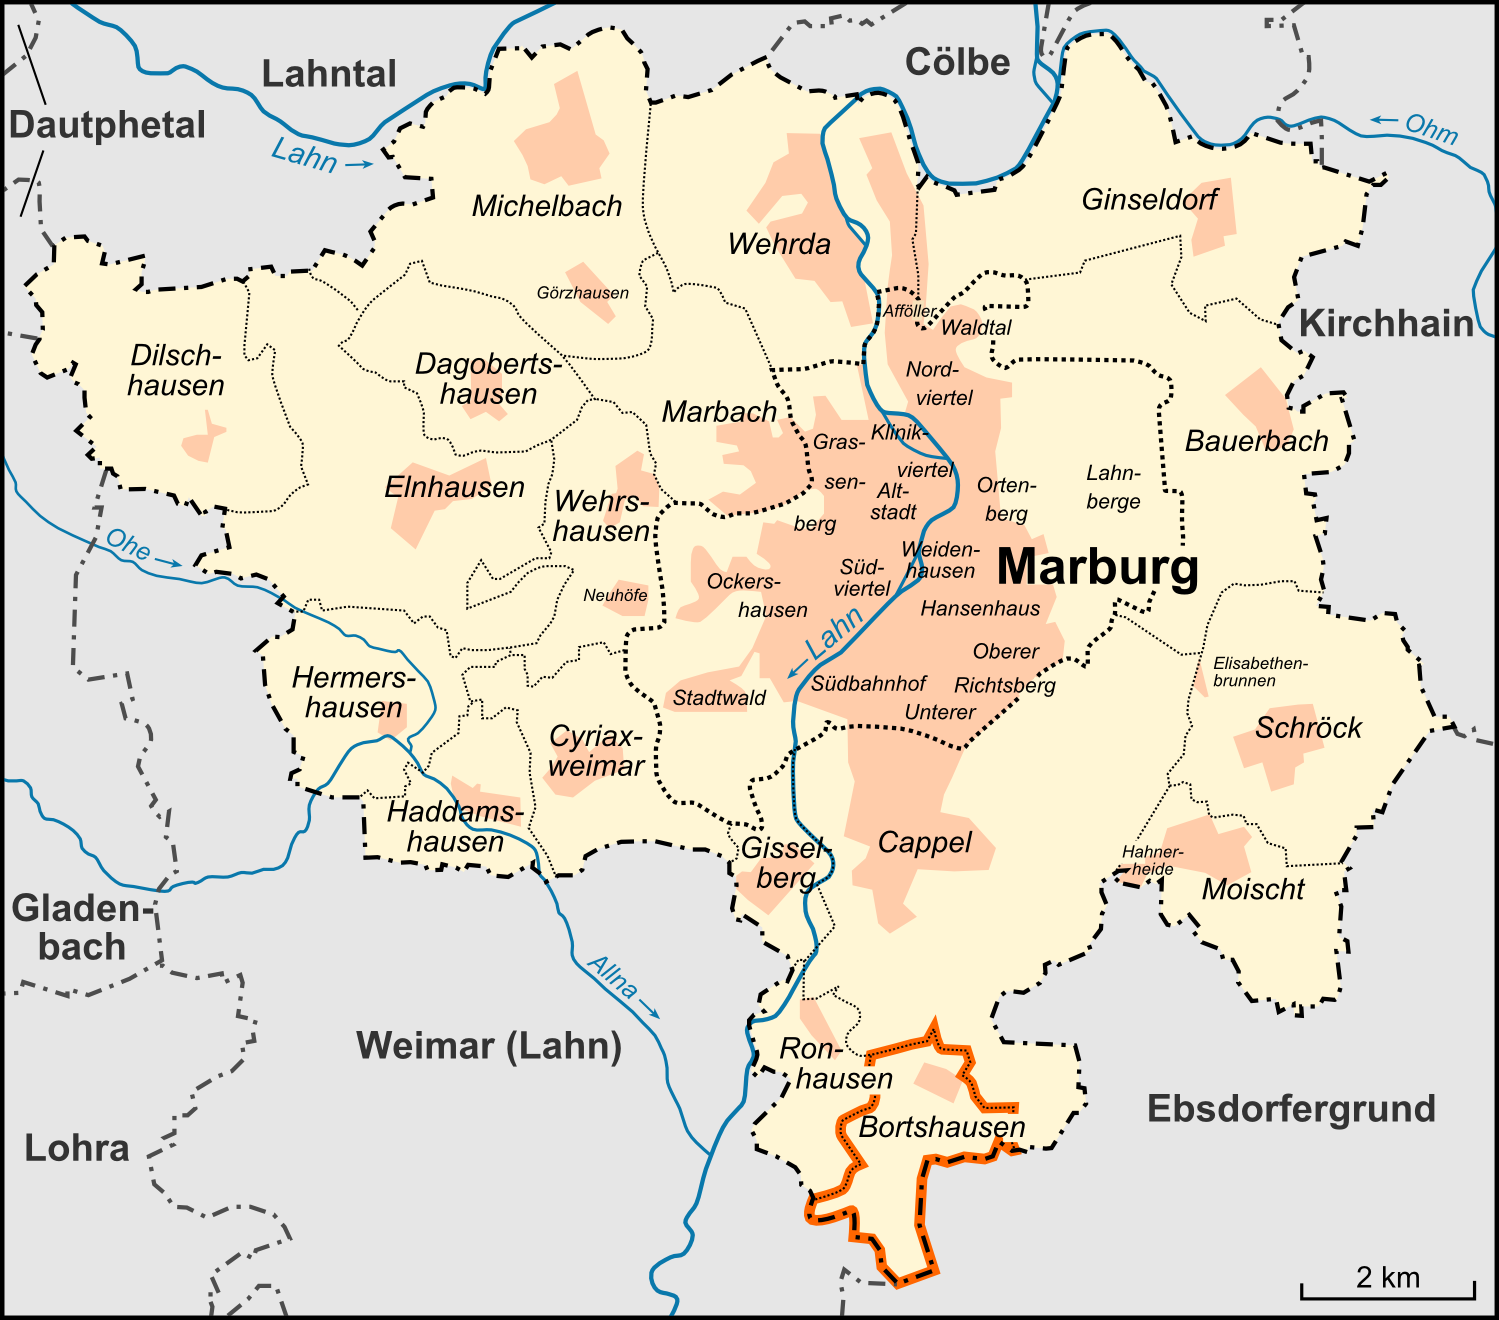 Bortshausen Karte.png